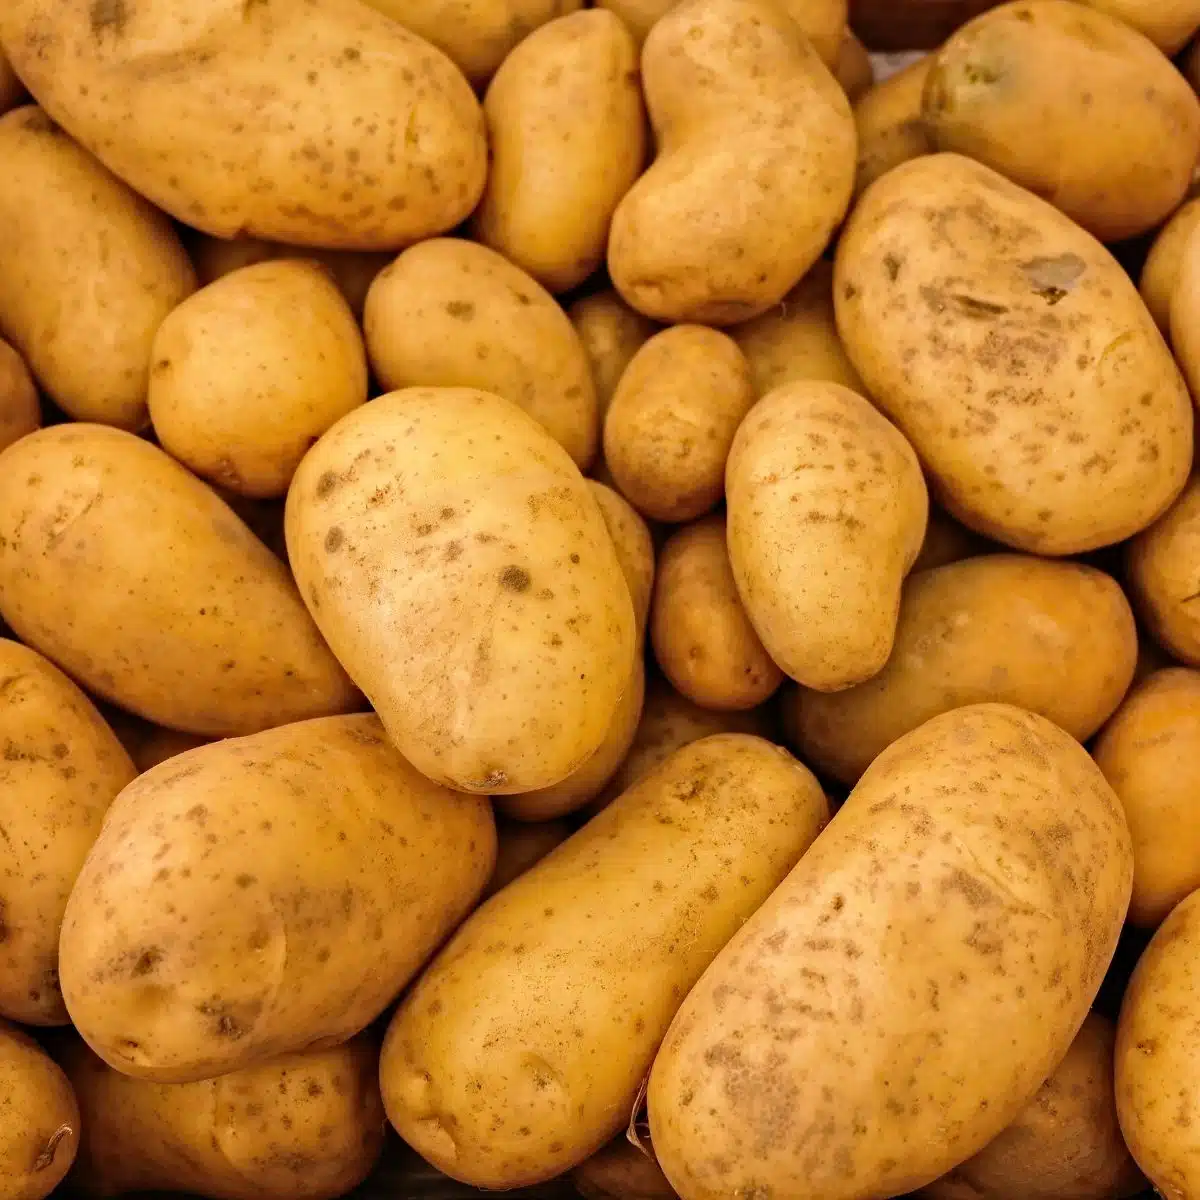 Square image of potatoes.